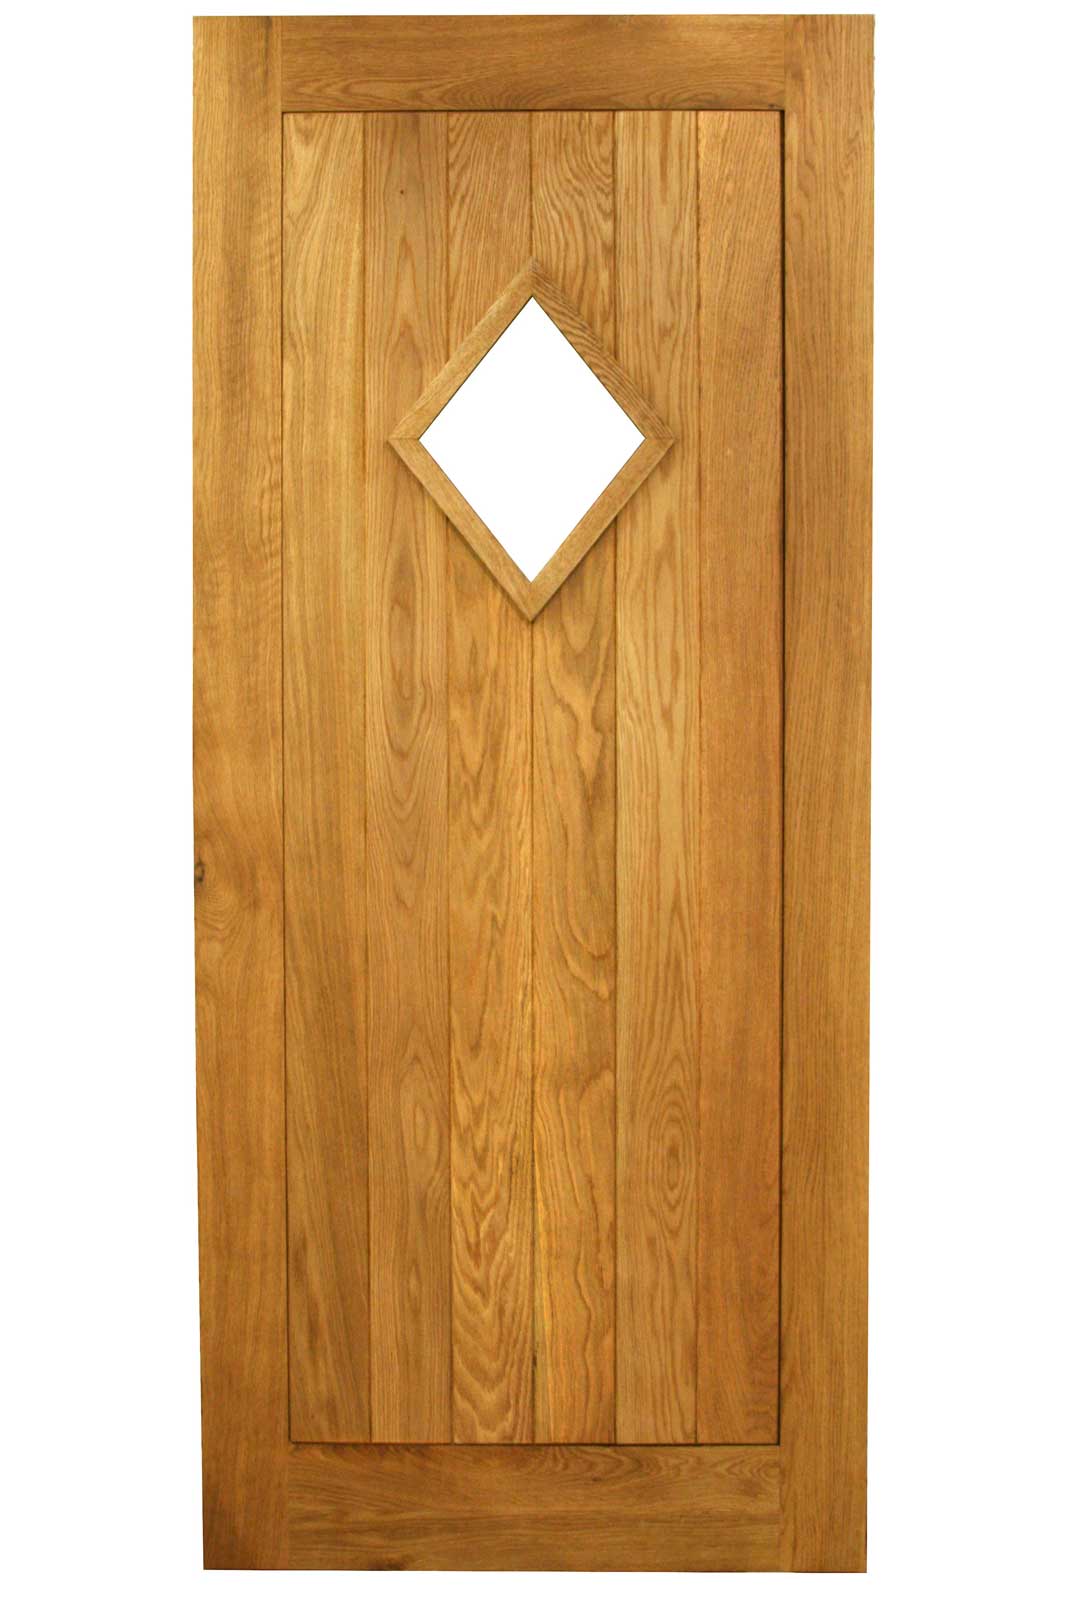 An image of External Traditional Diamond Solid Oak Door